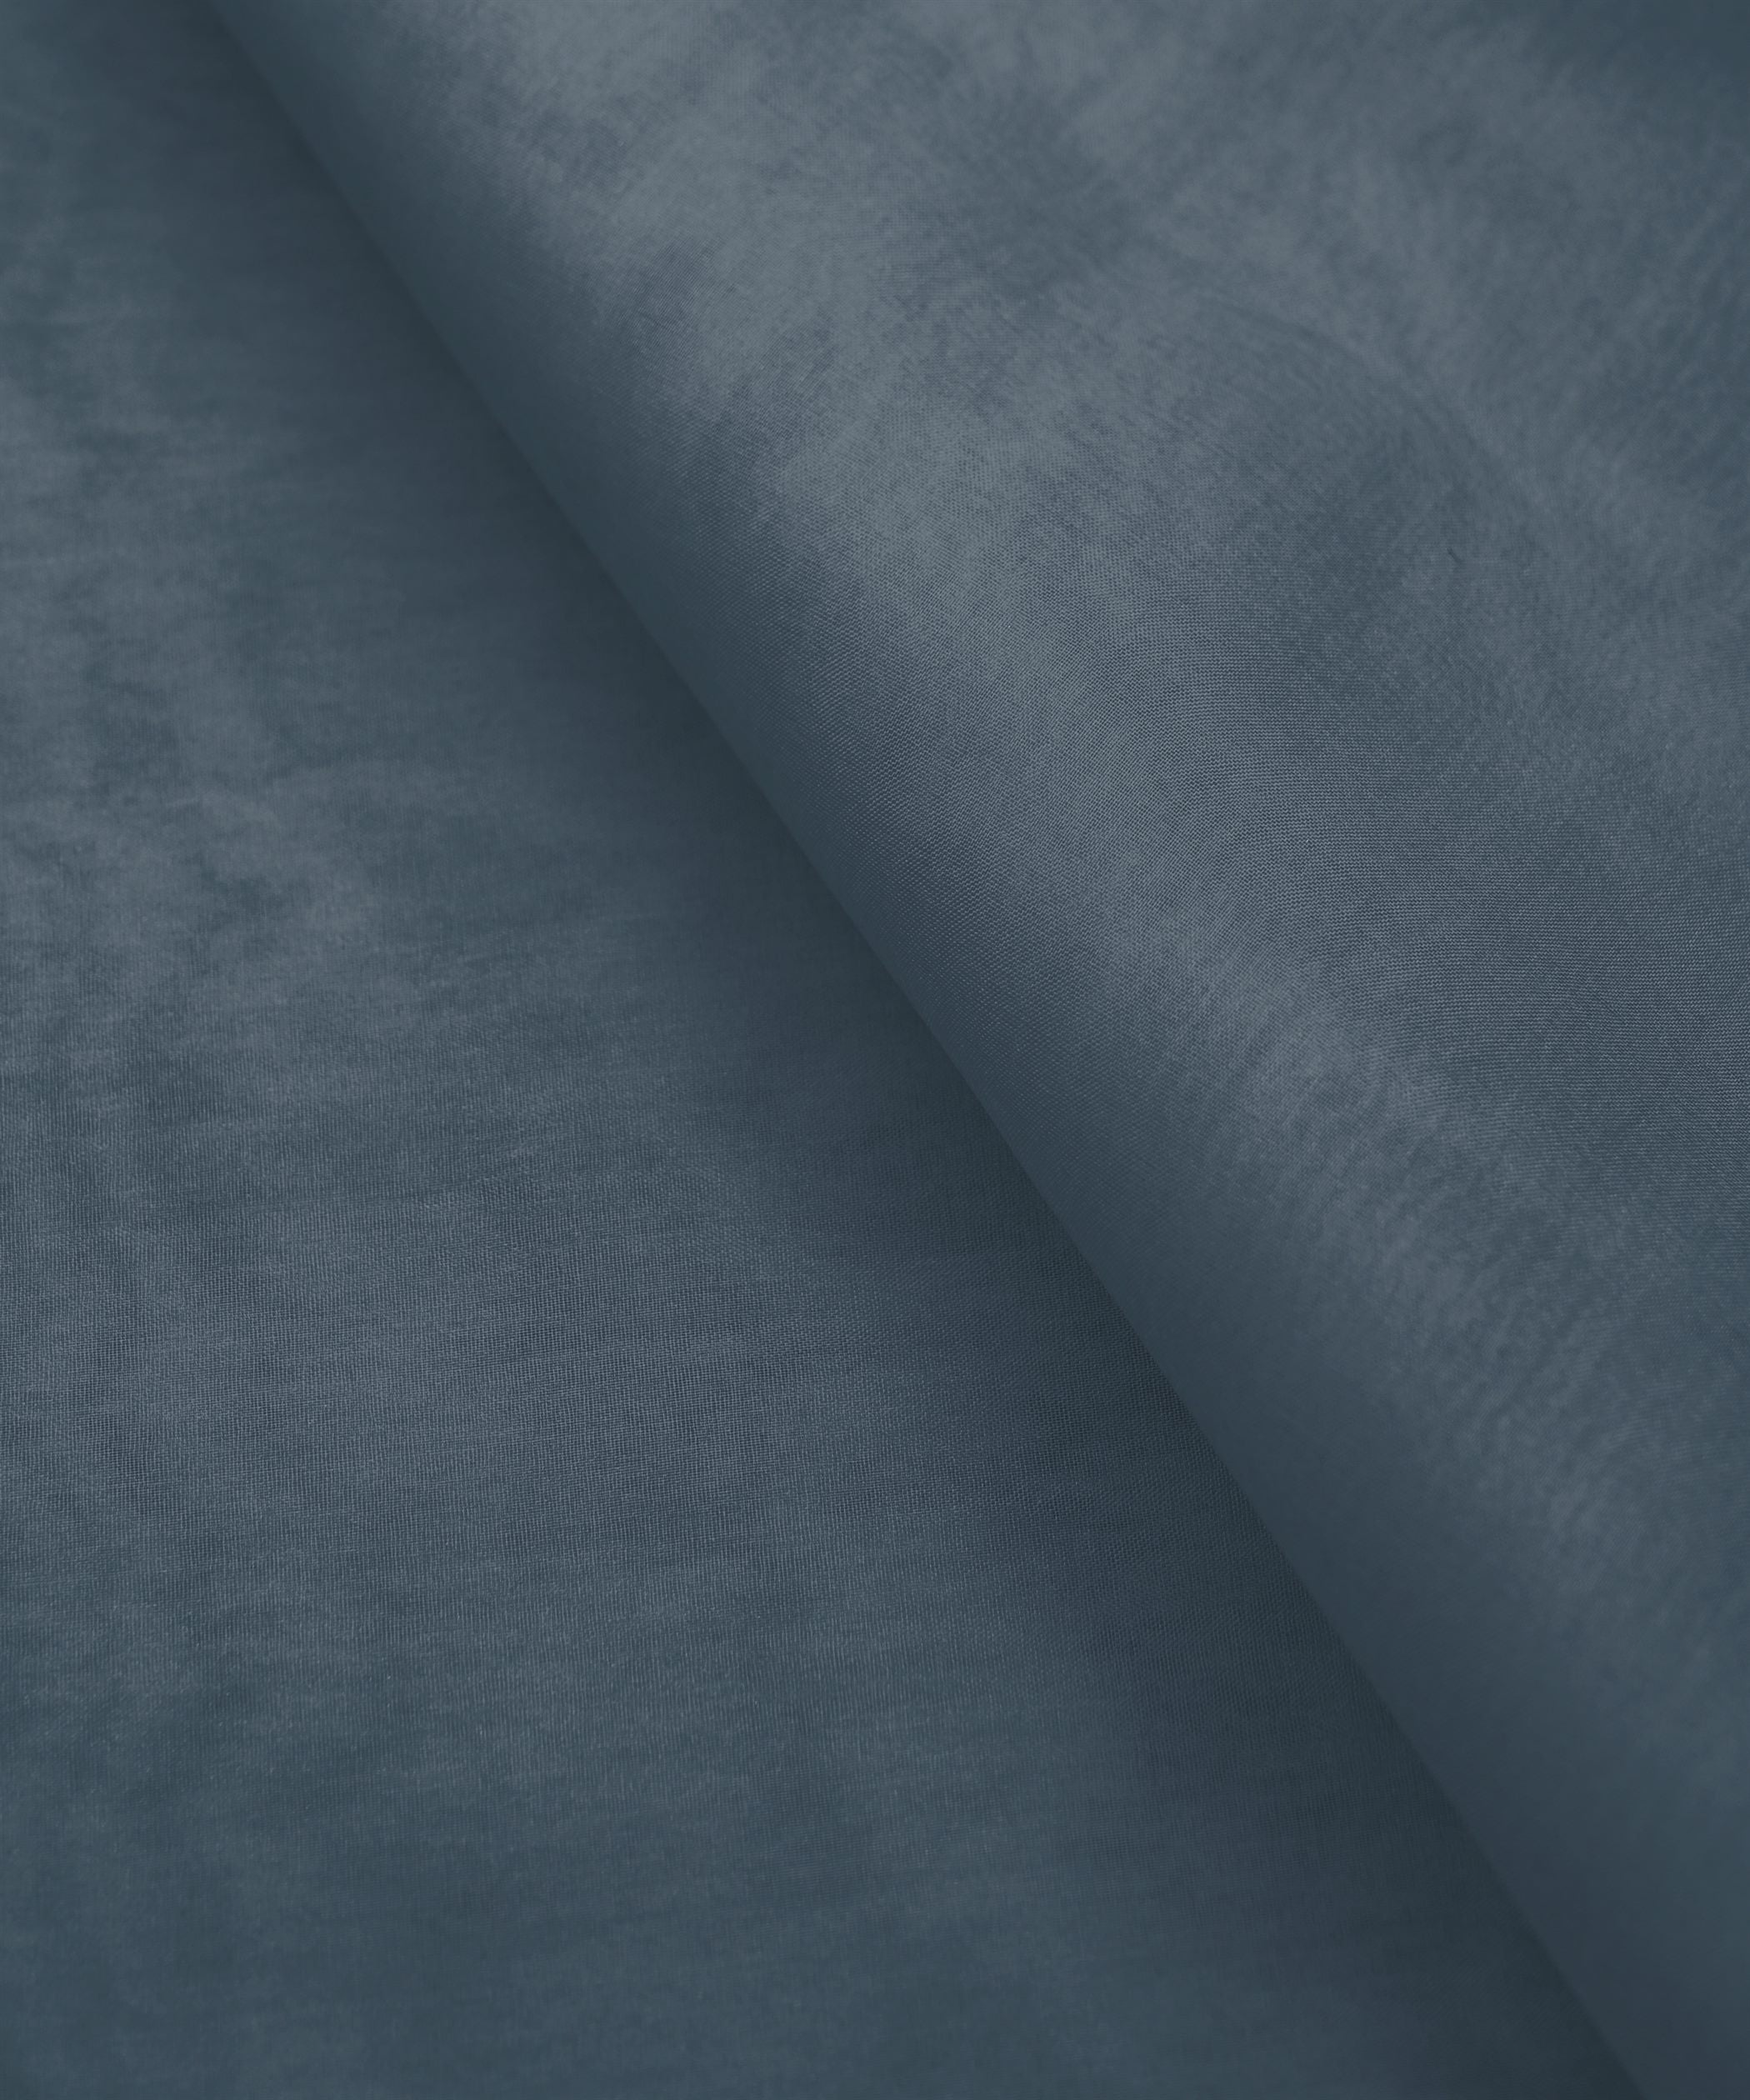 Charcoal Grey Plain Dyed Organza Fabric